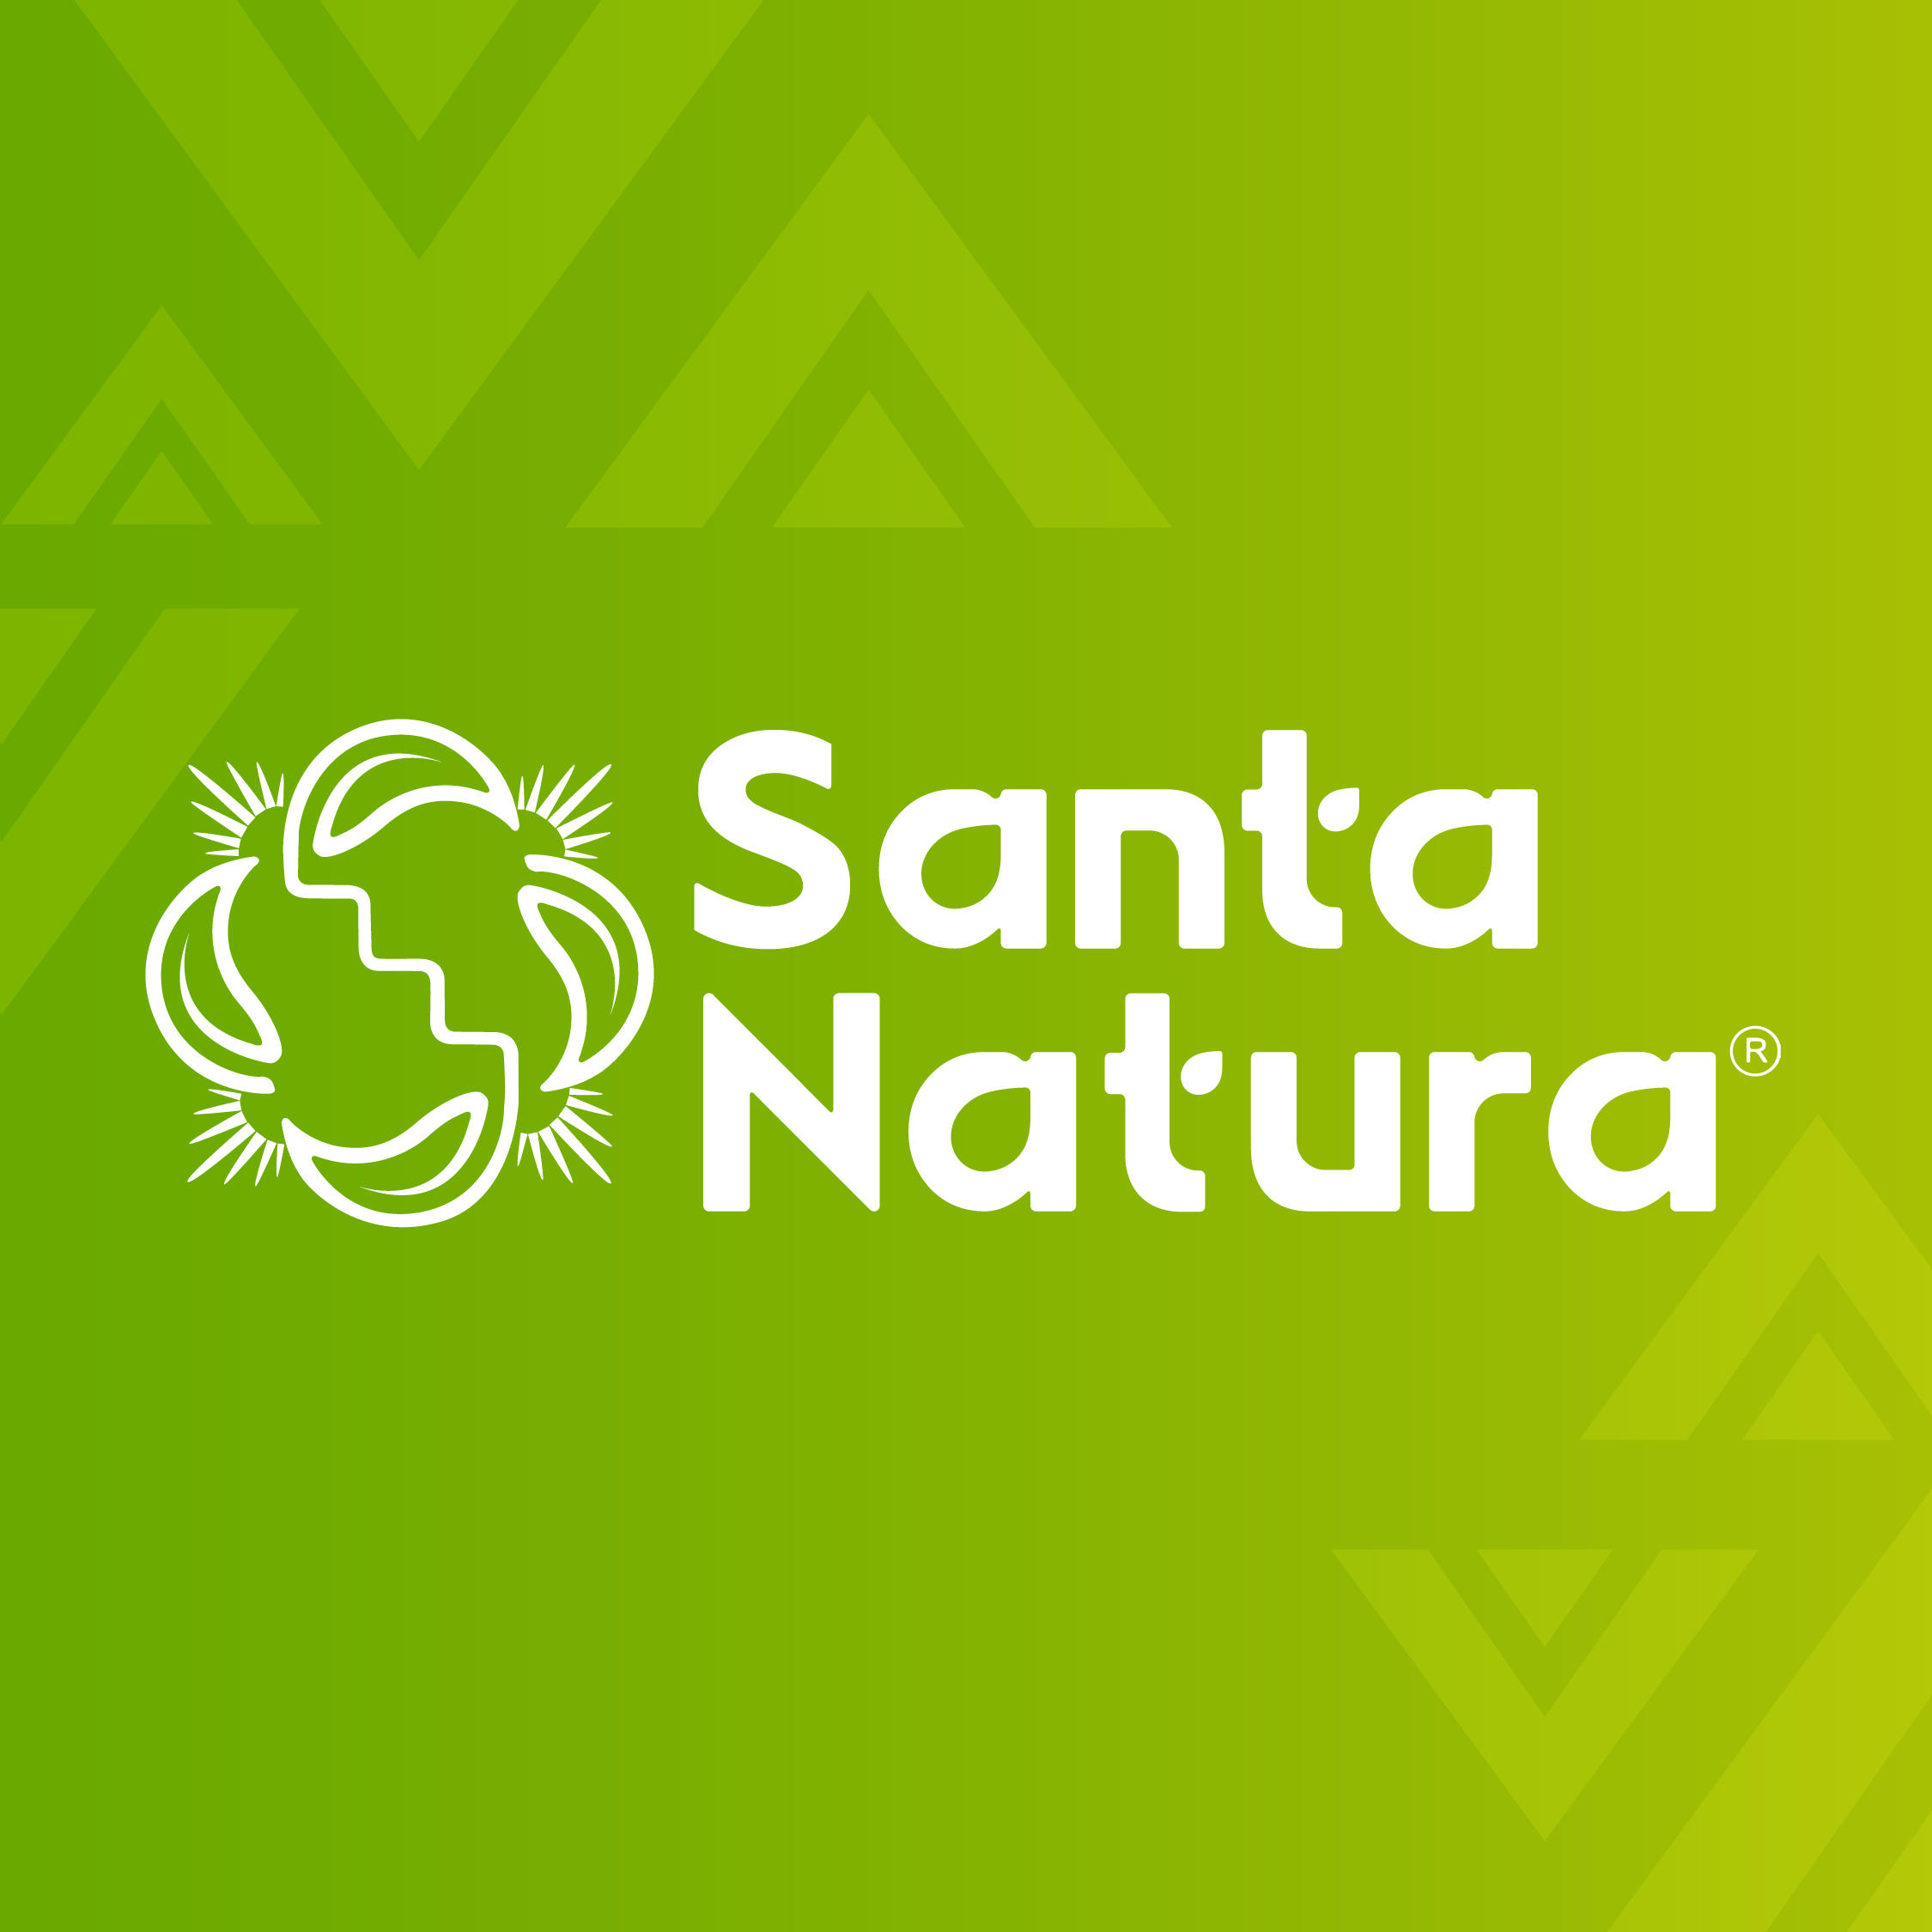 Santa Natura GIFs on GIPHY - Be Animated